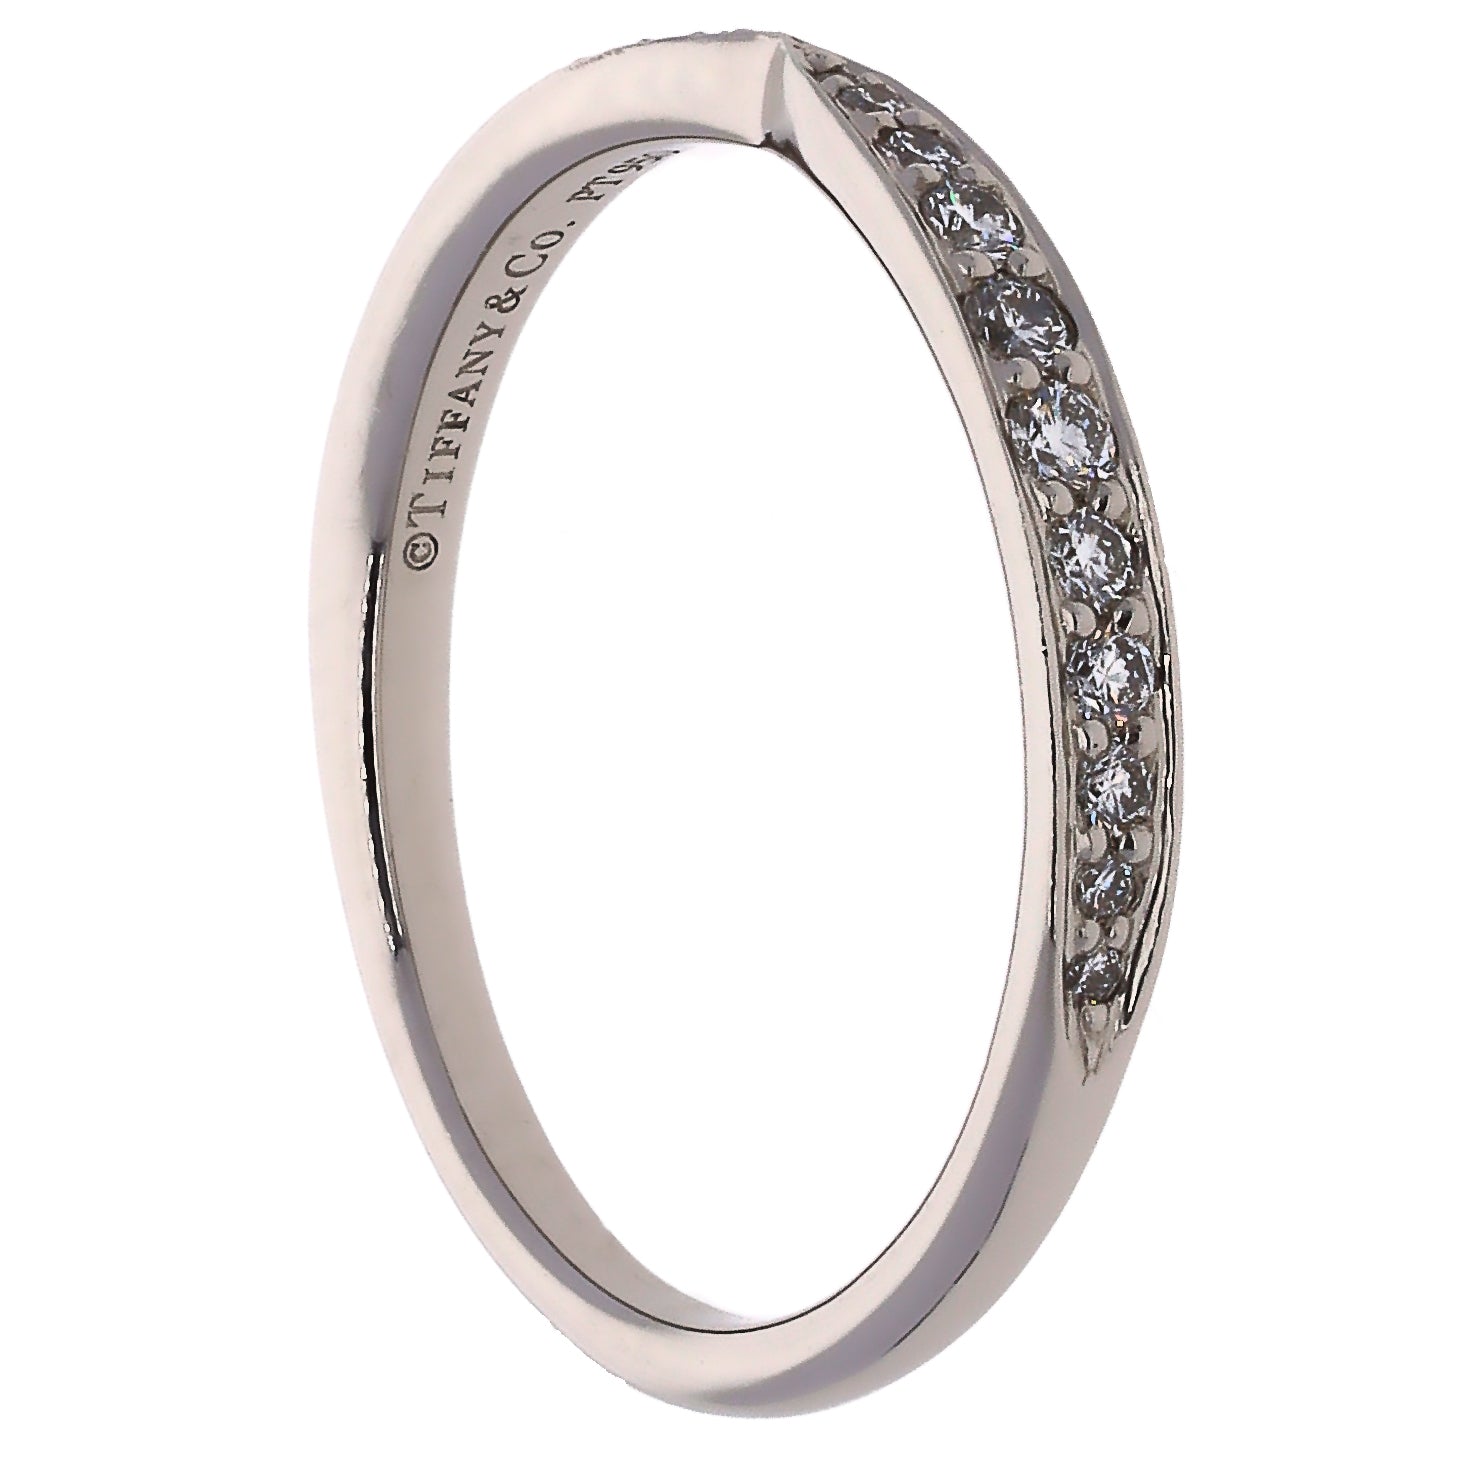 Tiffany & Co. Platinum 1.54ct Oval Diamond Engagement and Wedding Ring Set